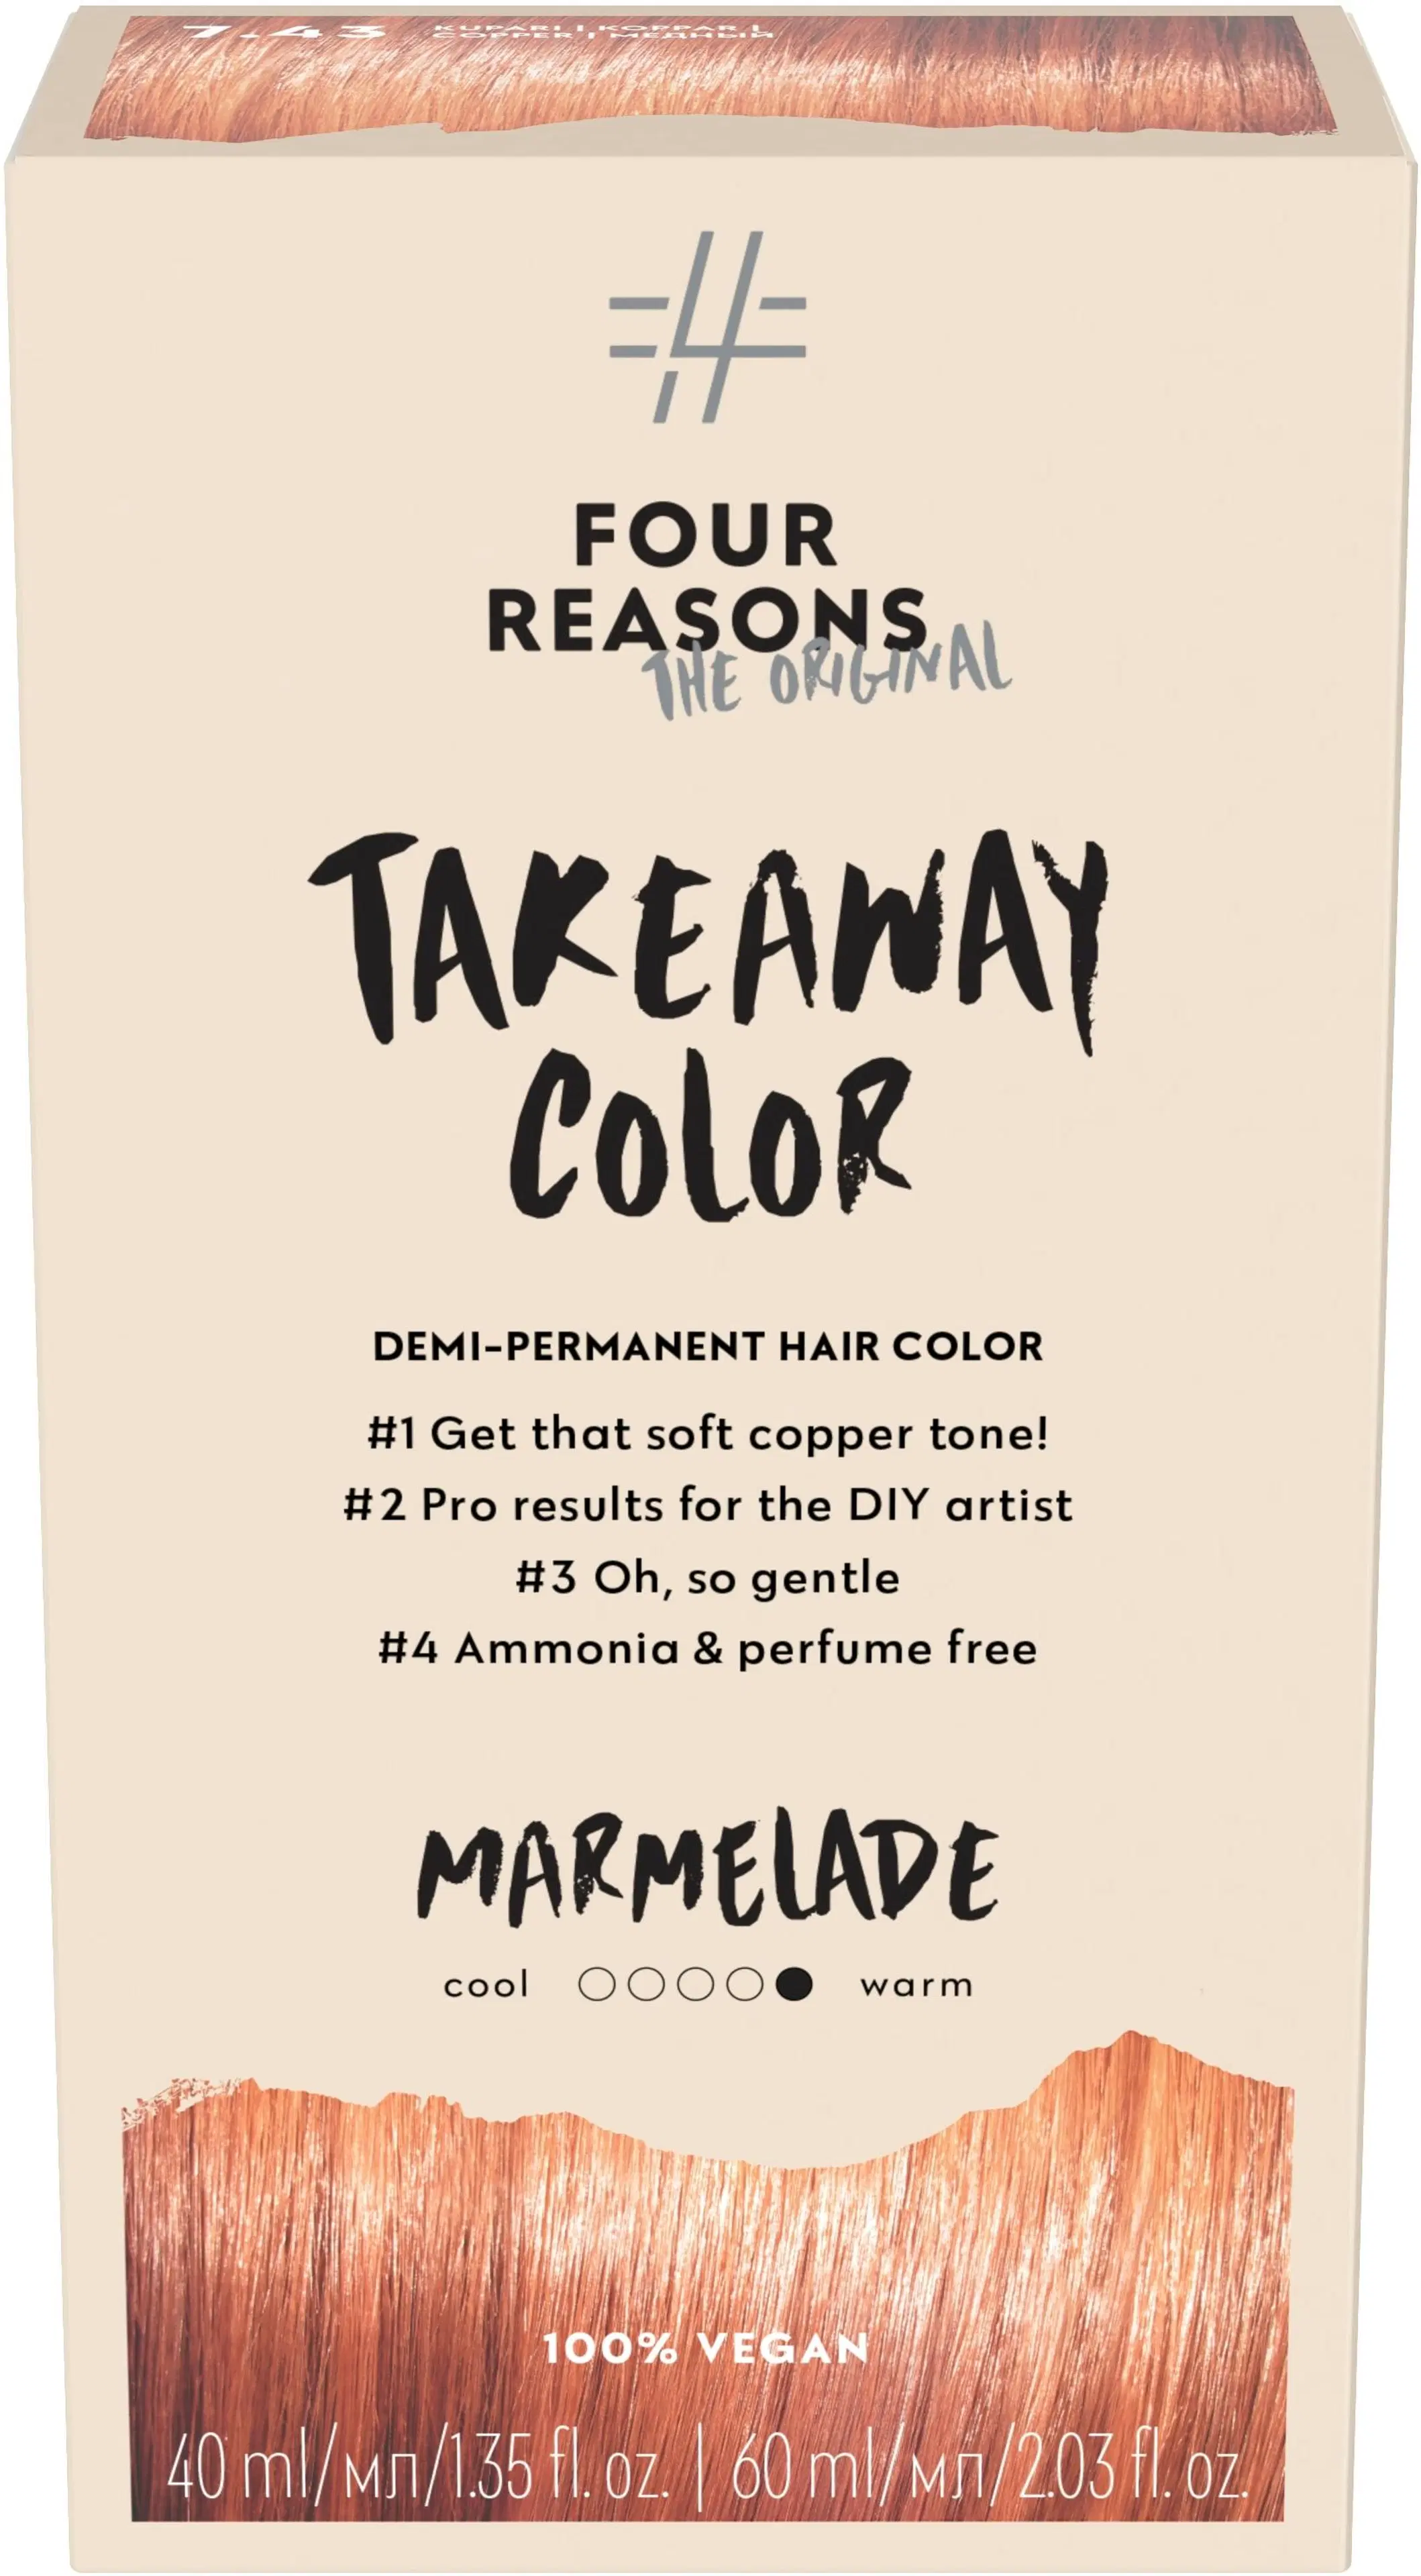 Four Reasons Original Takeaway Color 7.43 Marmelade kestosävyte